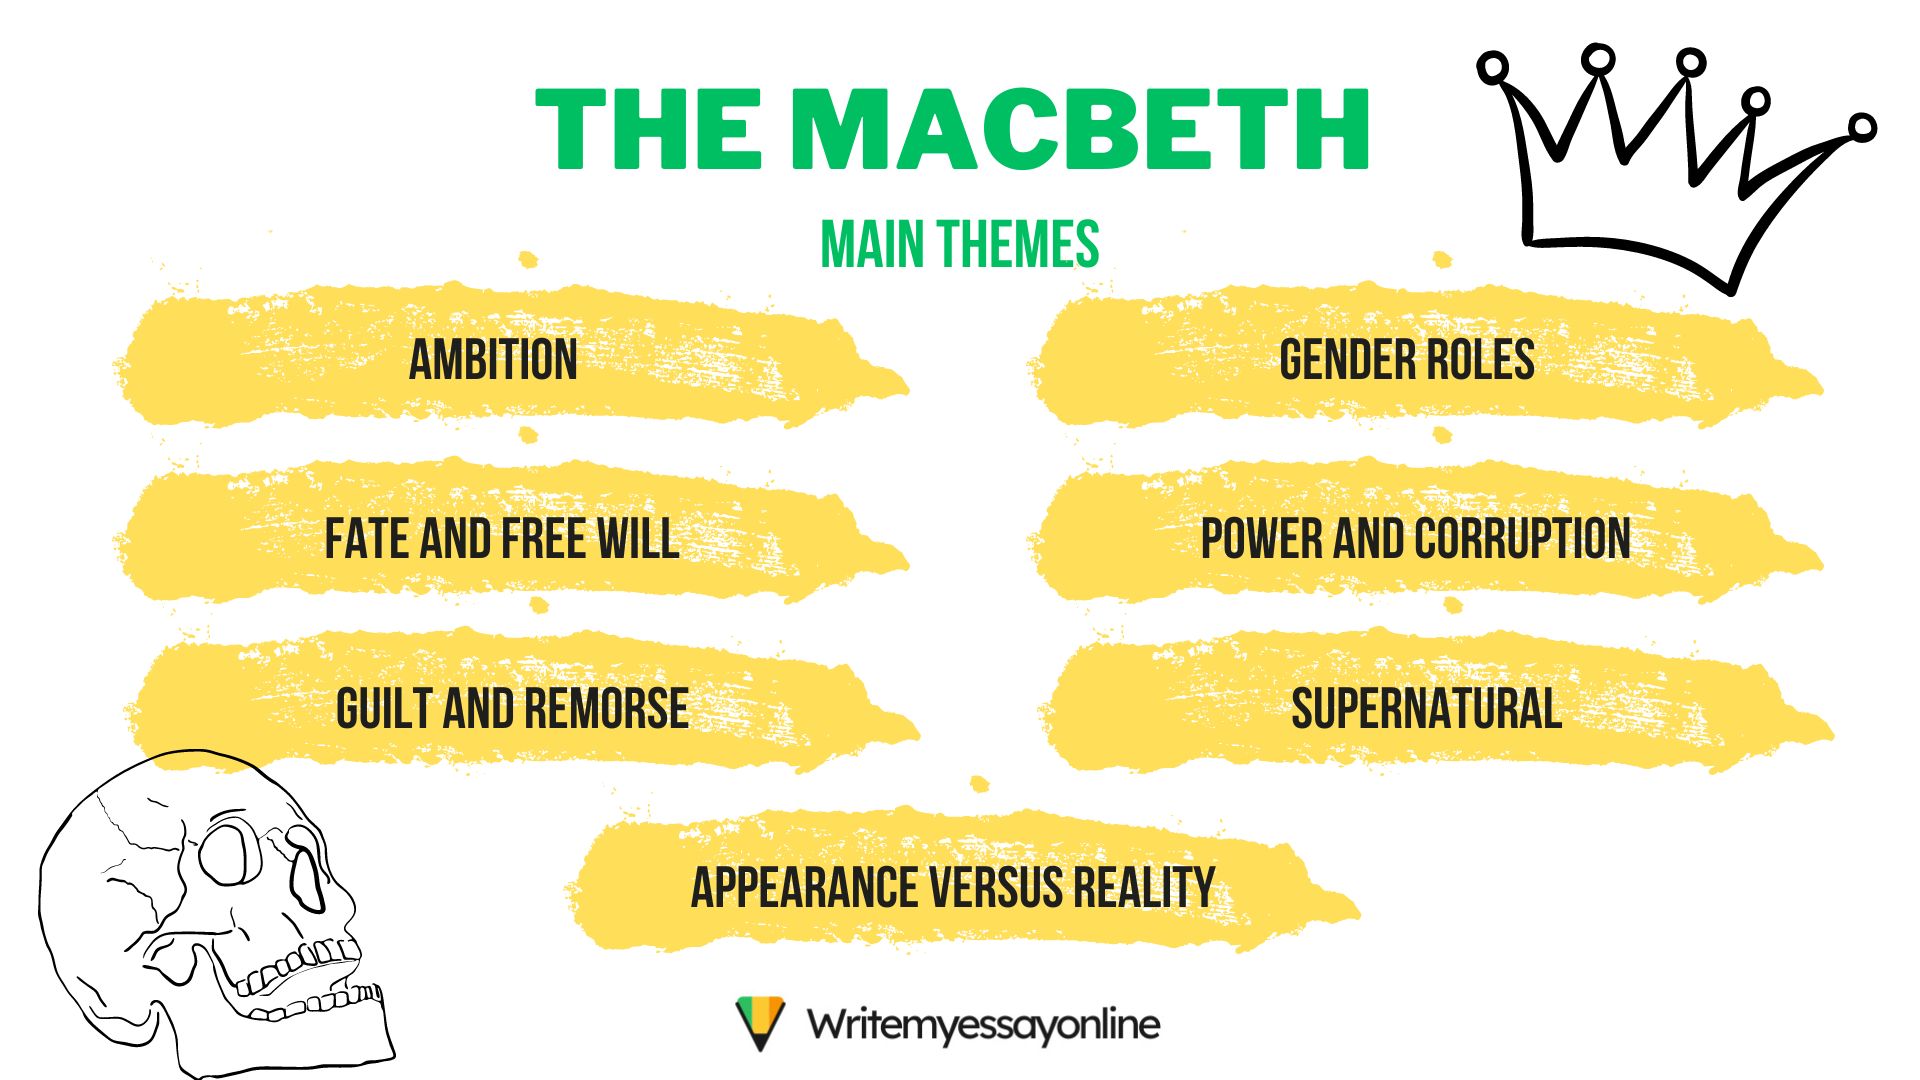 Macbeth main themes